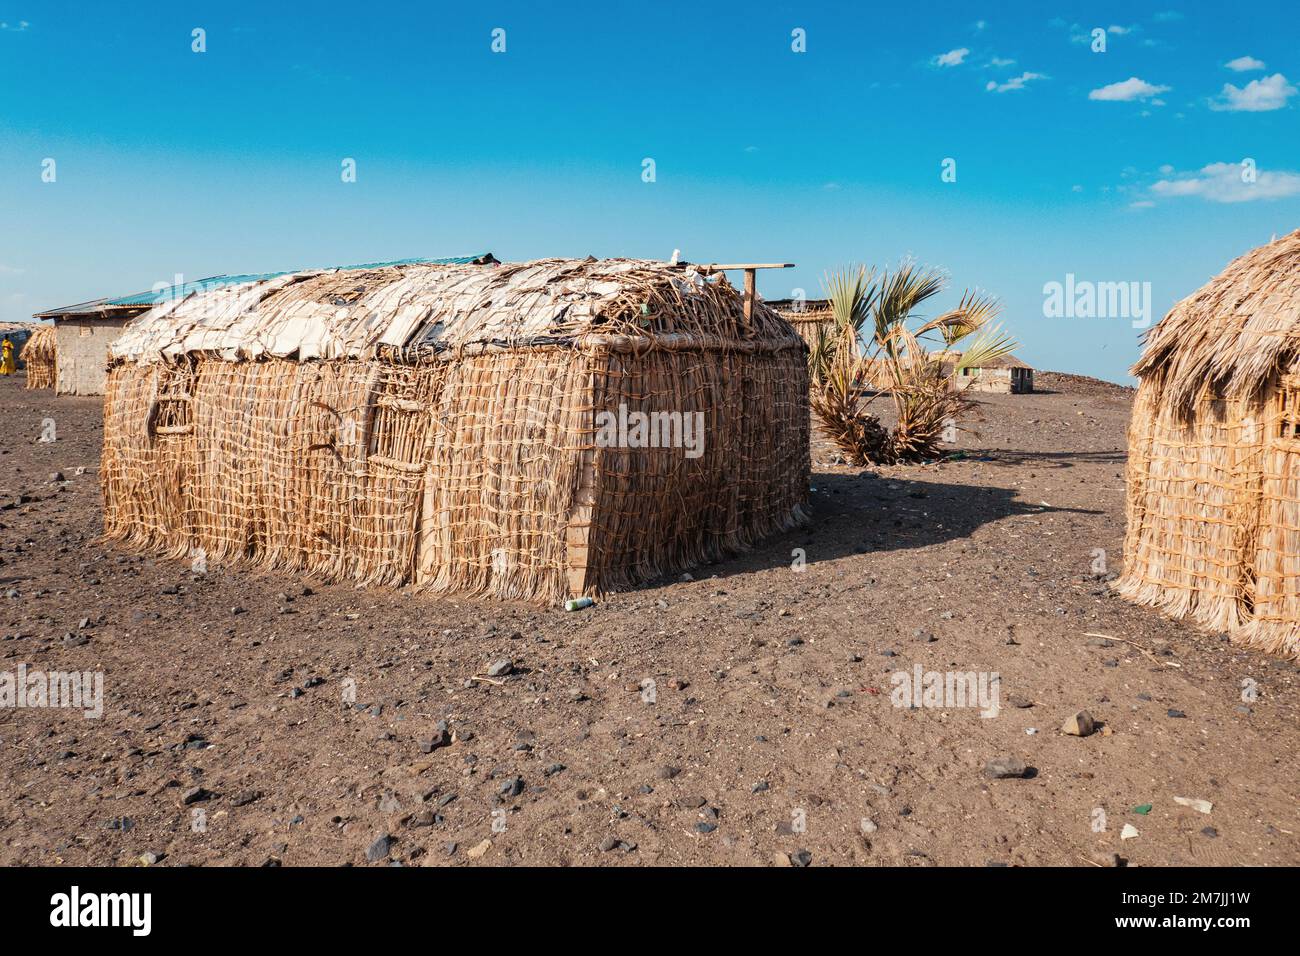 Traditional houses of the El Molo people in El Molo village living at the shores of Lake Turkana, Kenya Stock Photo